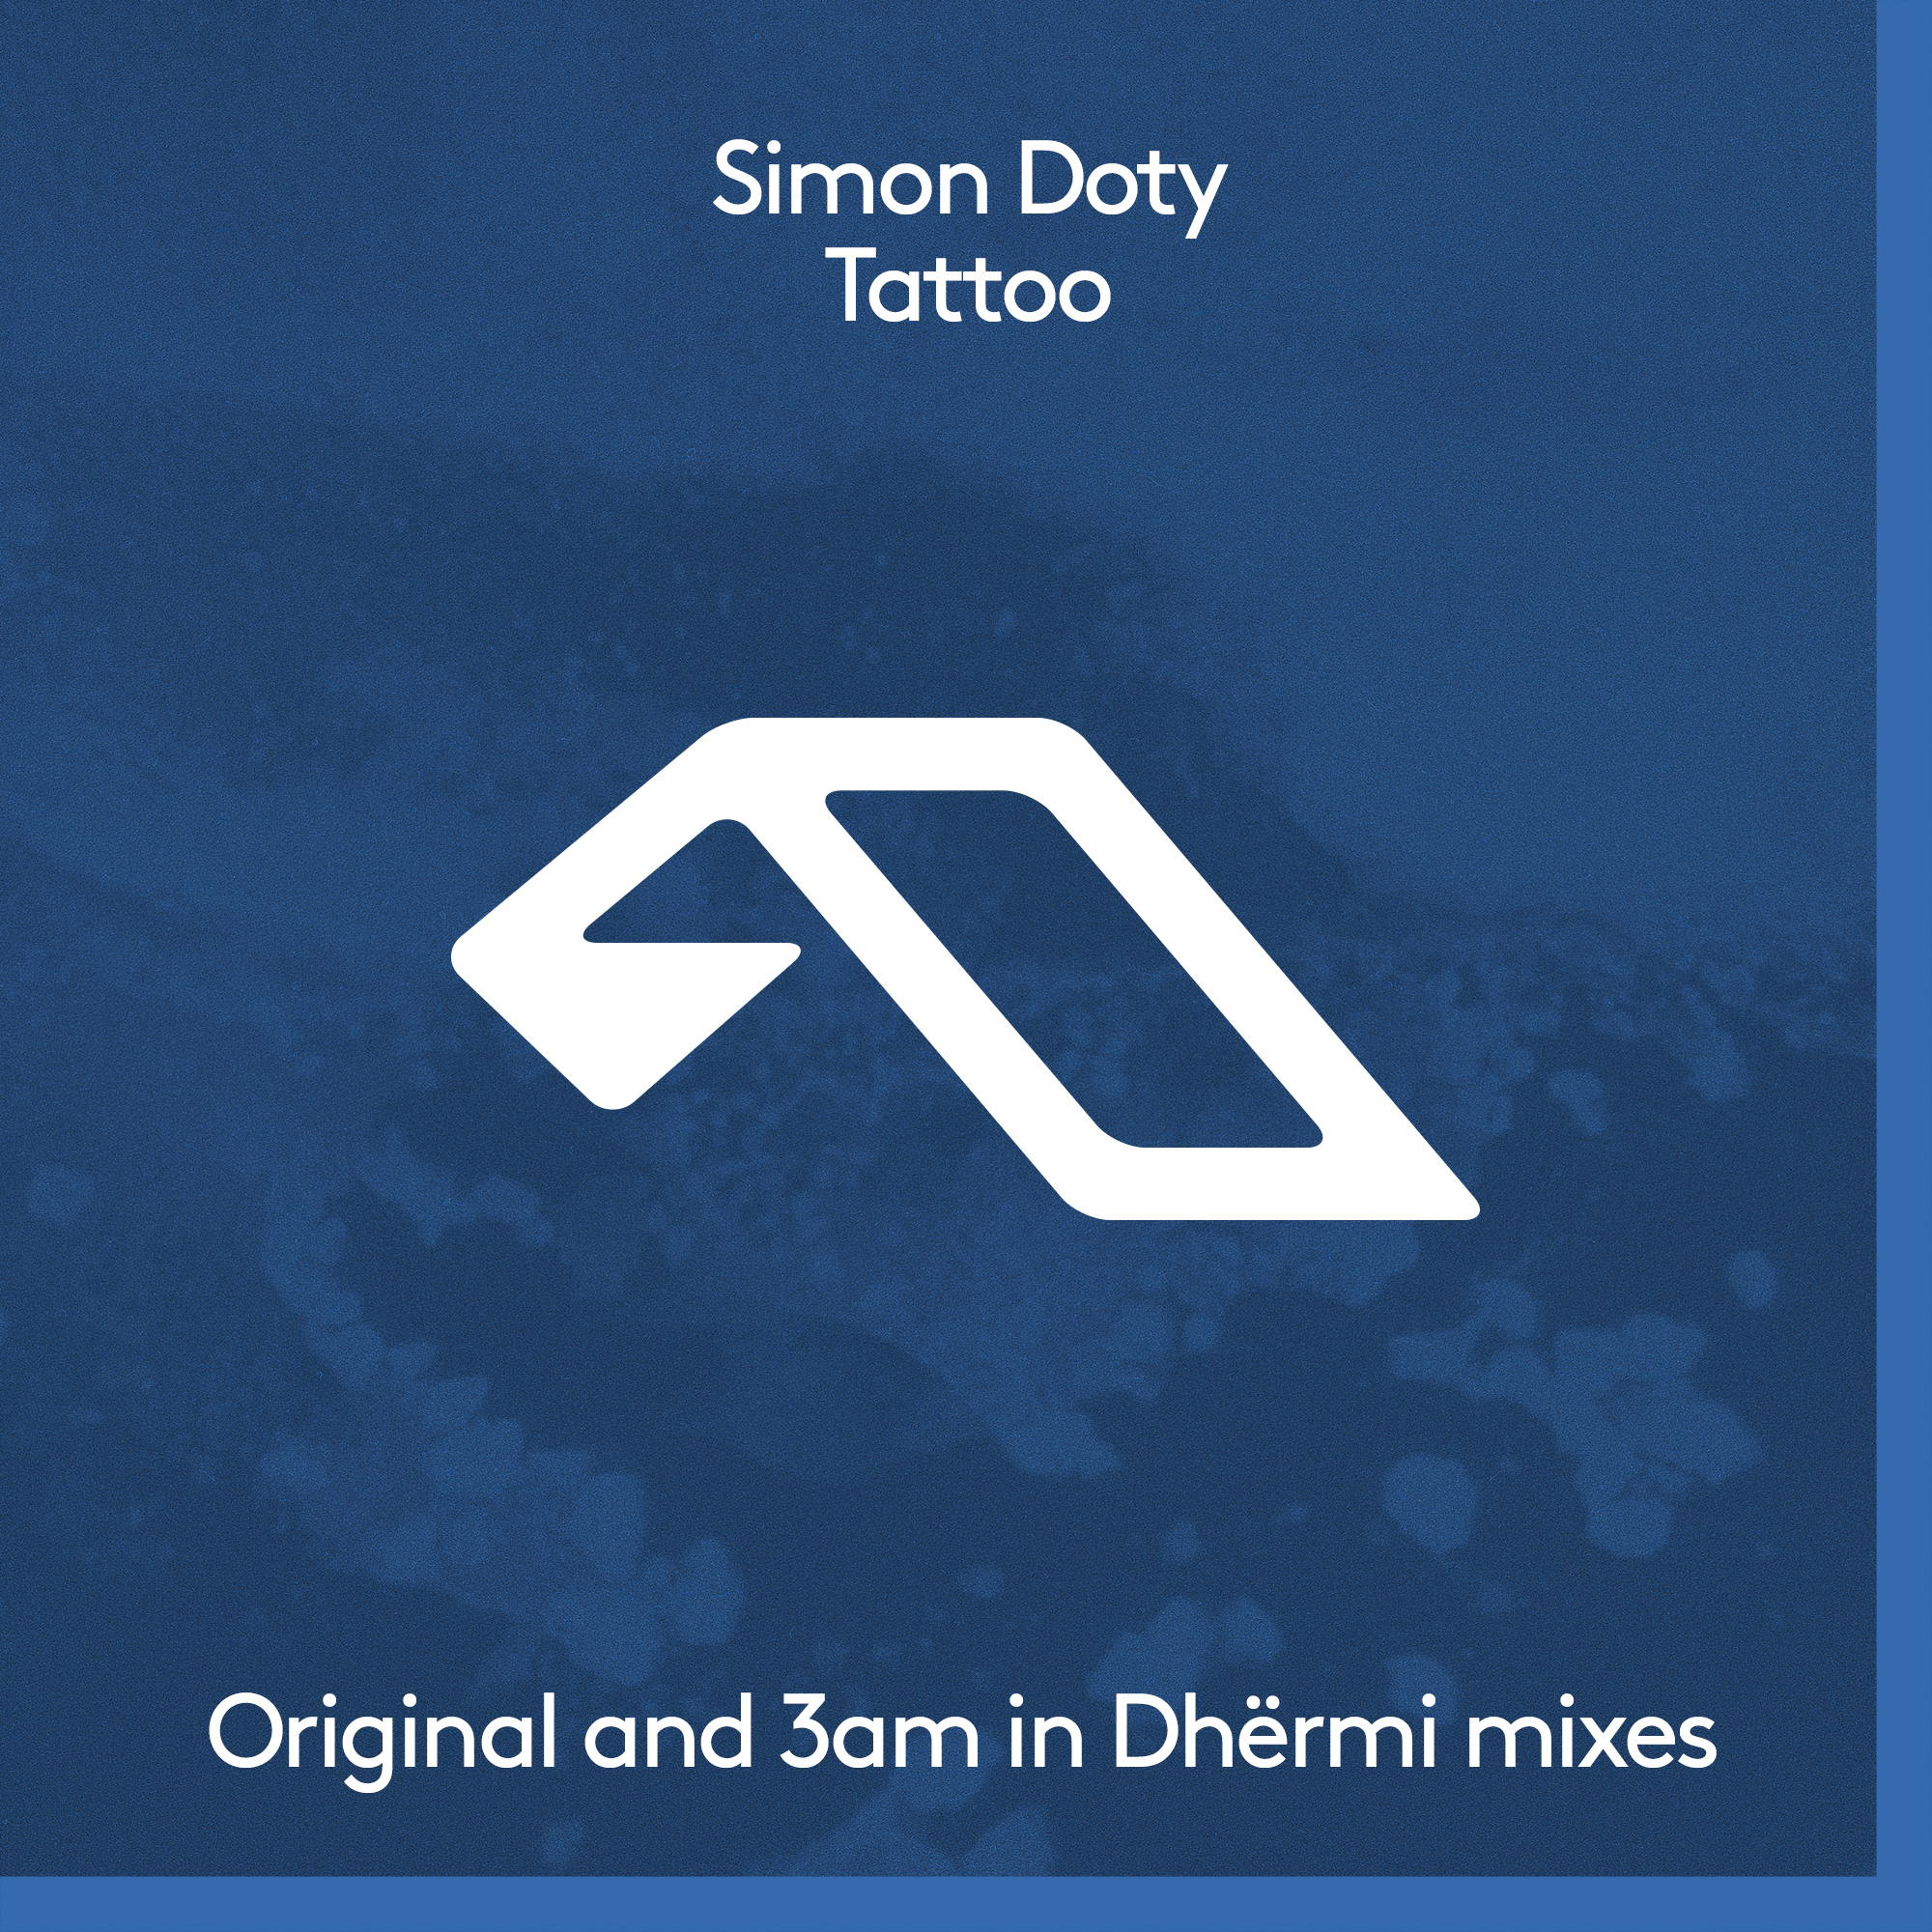 Simon Doty Tattoo cover artwork